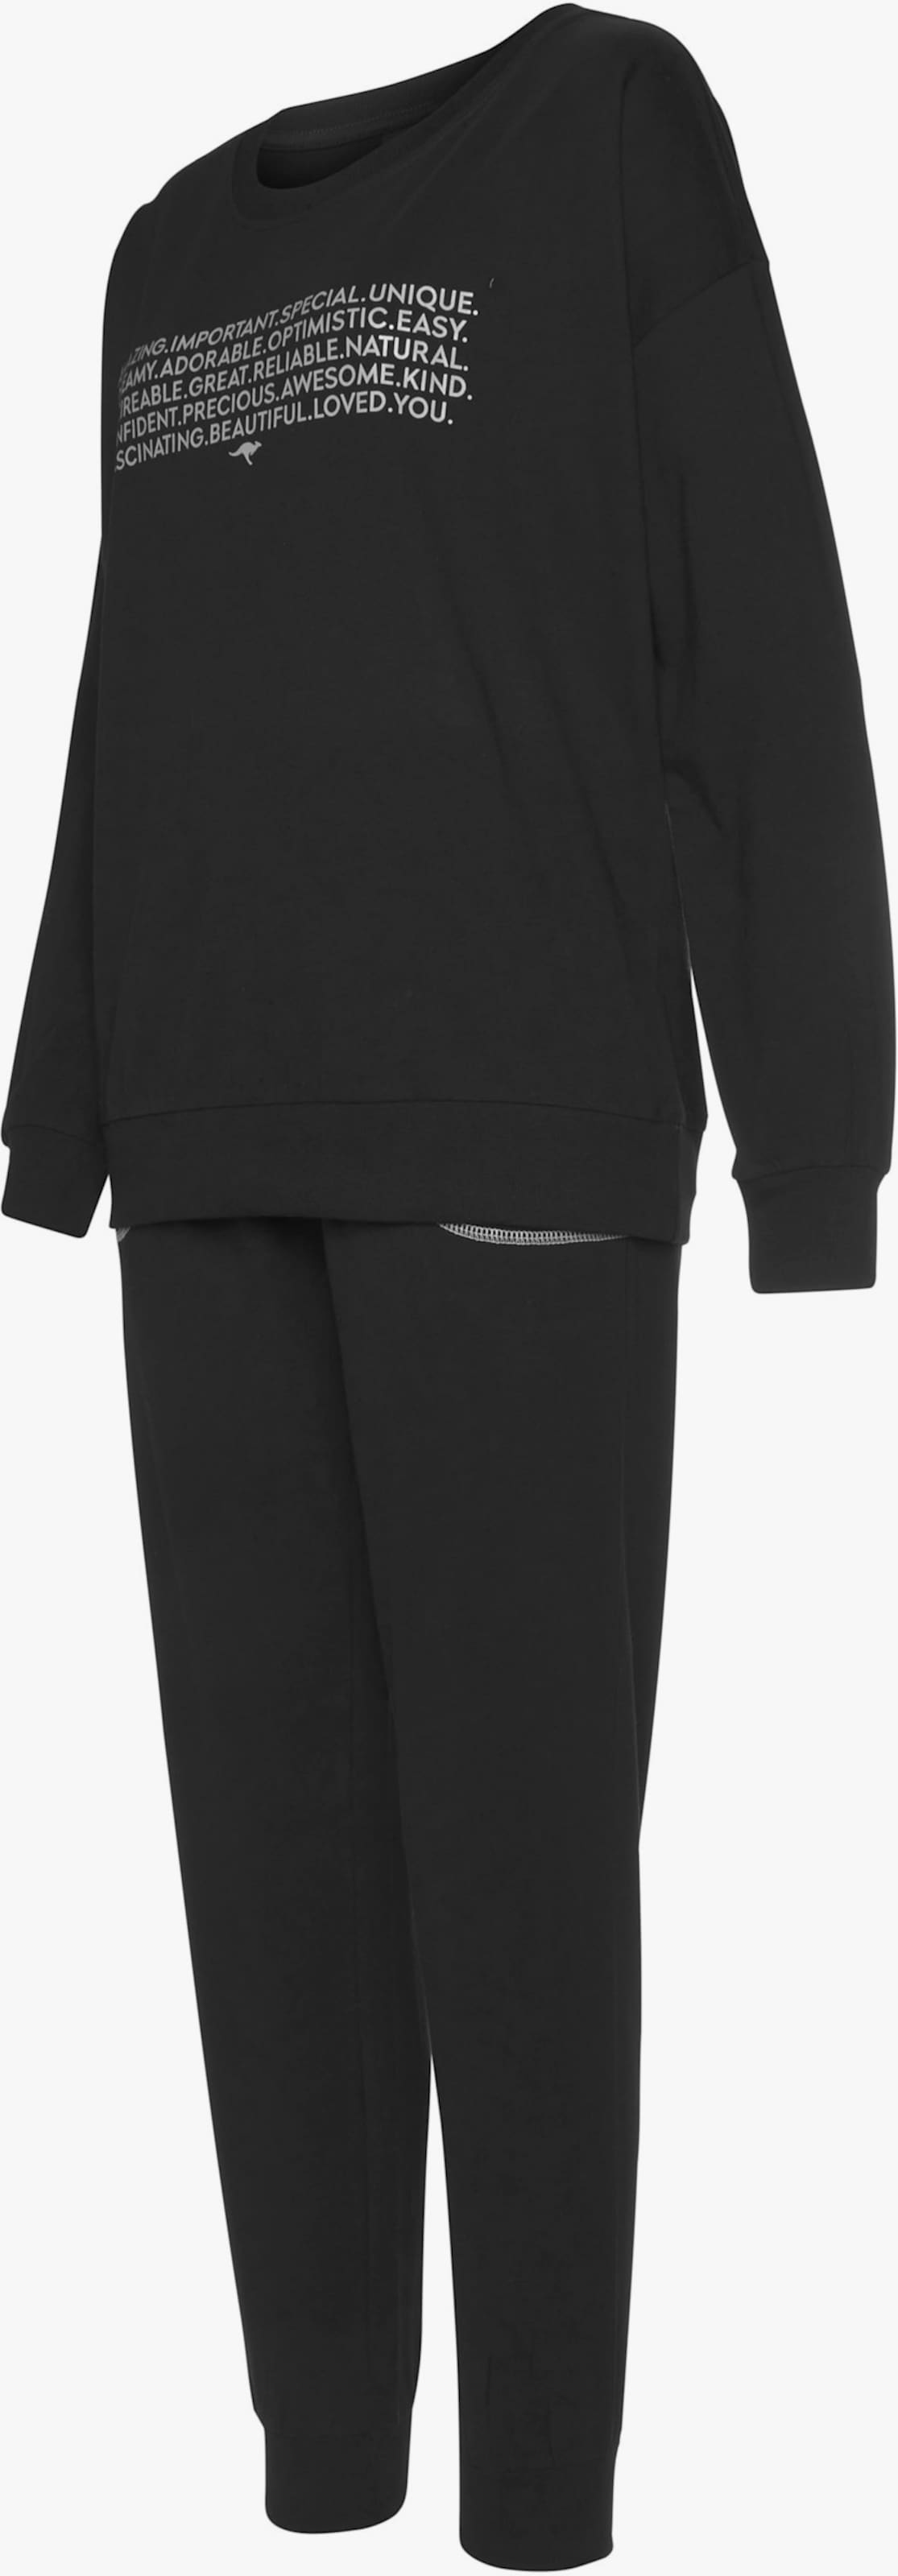 KangaROOS Pyjama - schwarz